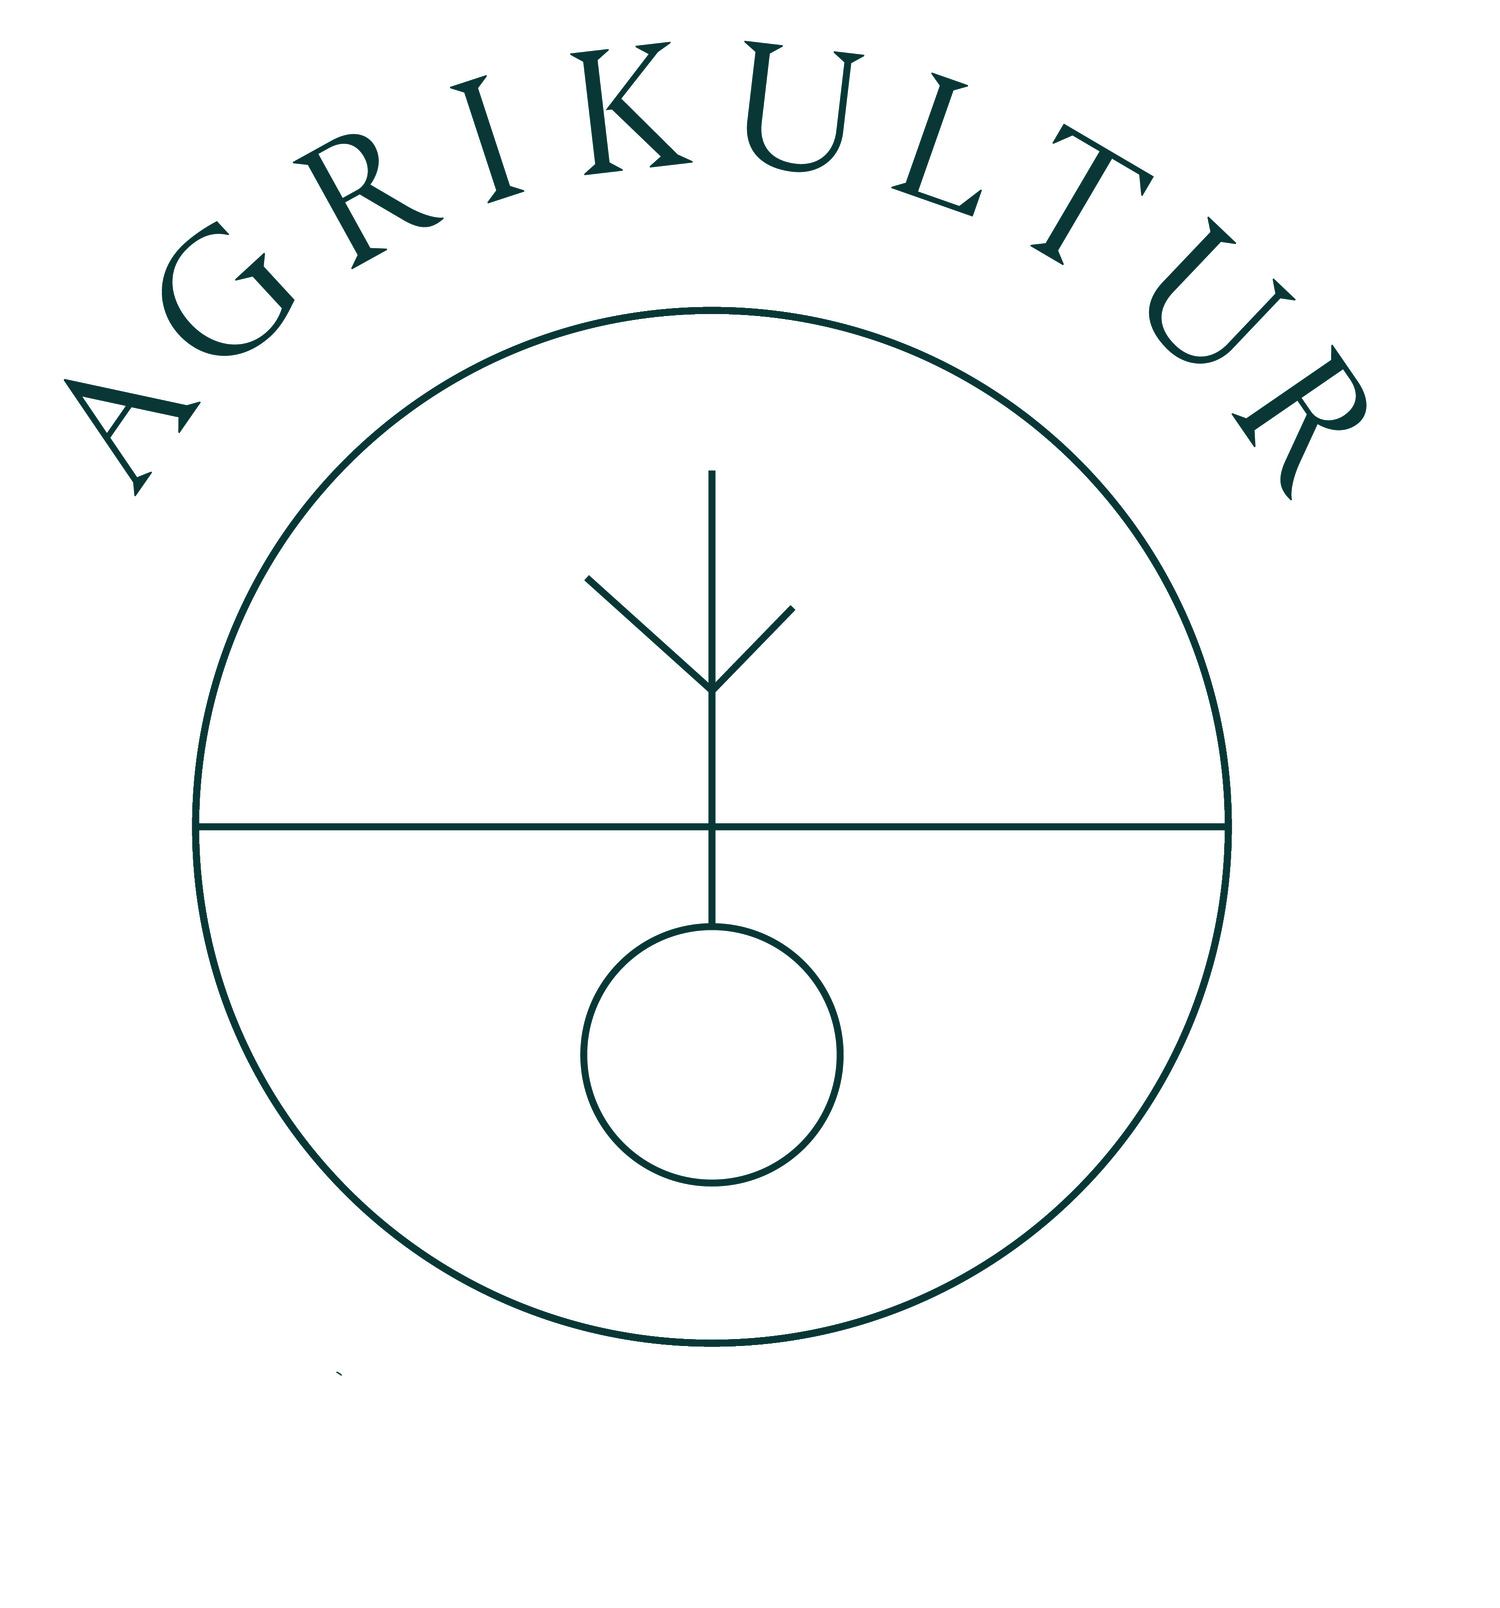 www.agrikultur.se